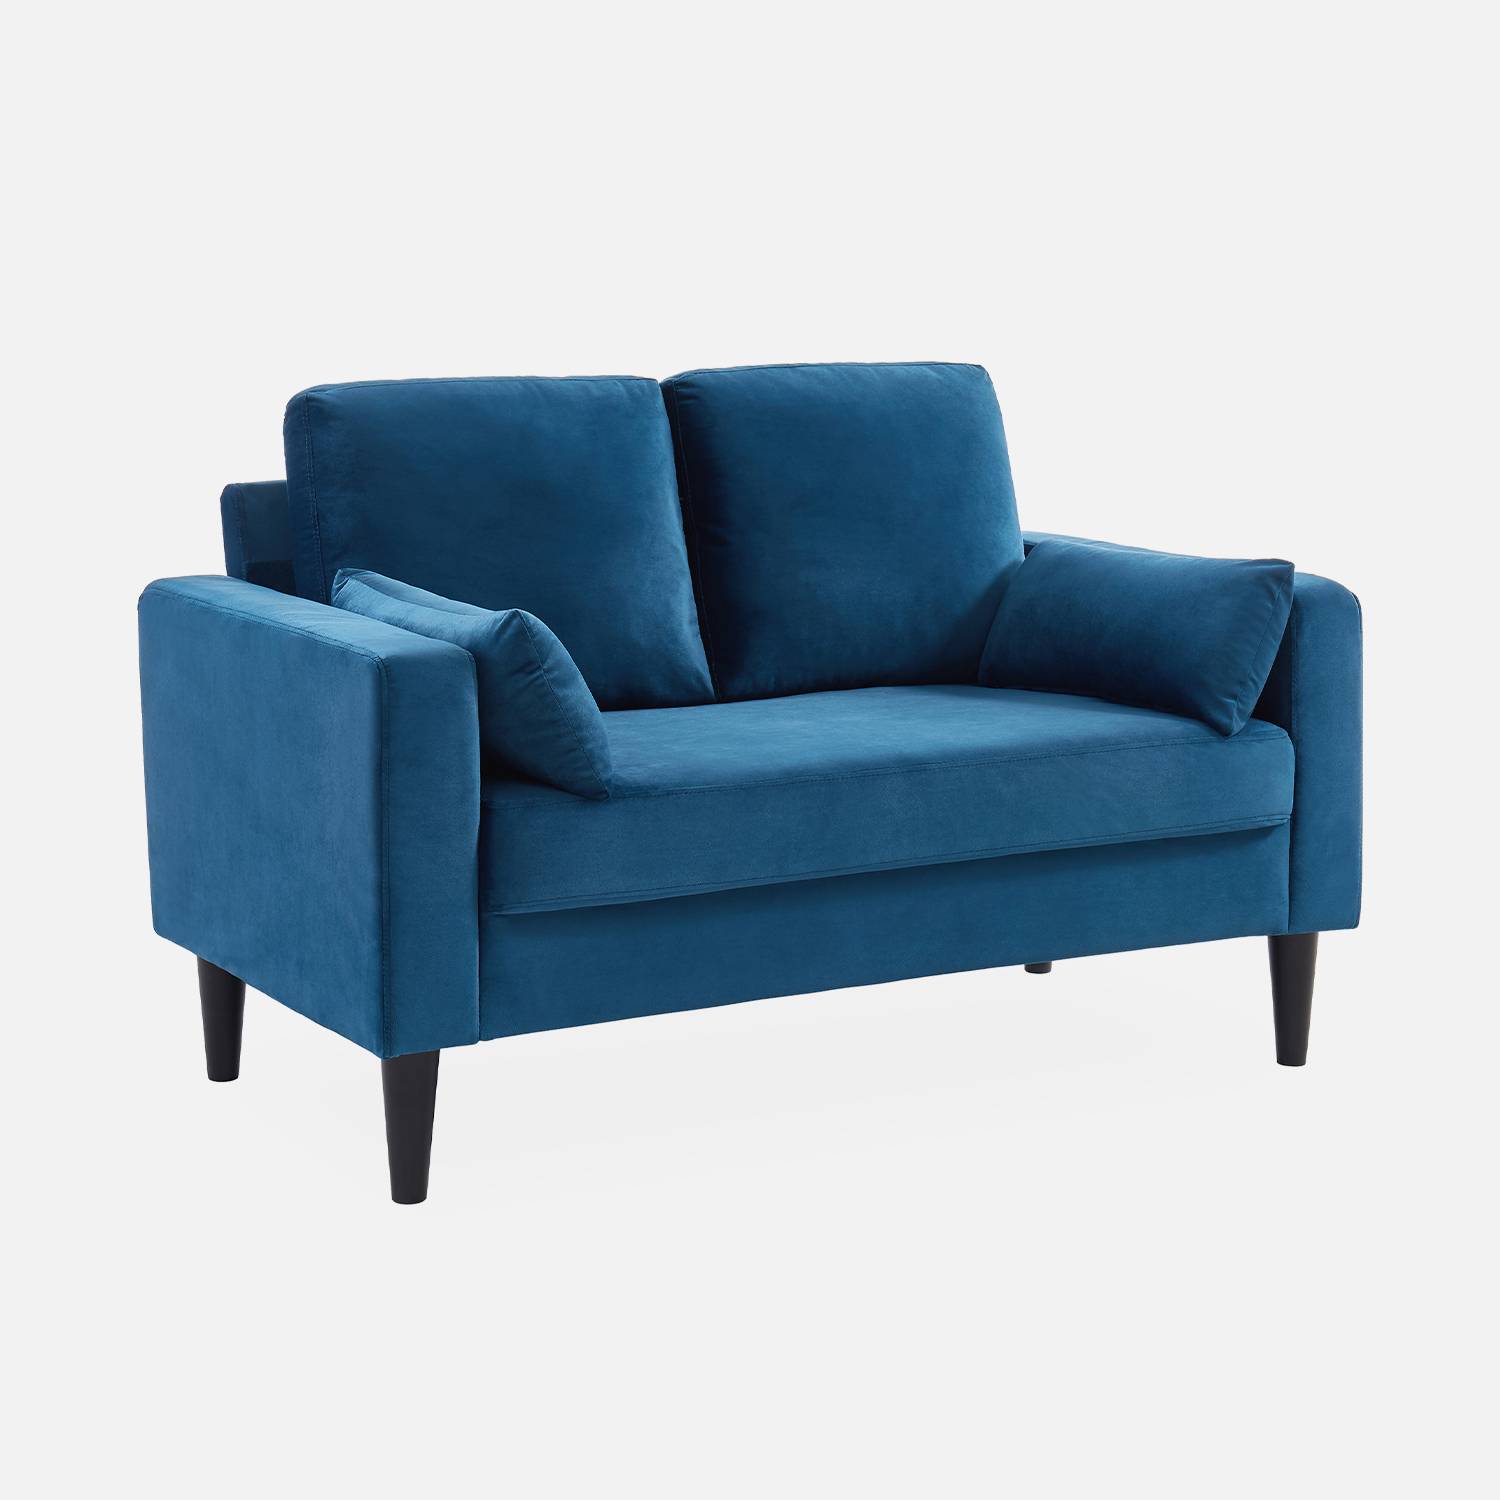 2-Sitz Sofa - Bjorn 2 - Blau, Gestell aus Holz, Samtbezug, Sofa im skandinavischen Stil  Photo3